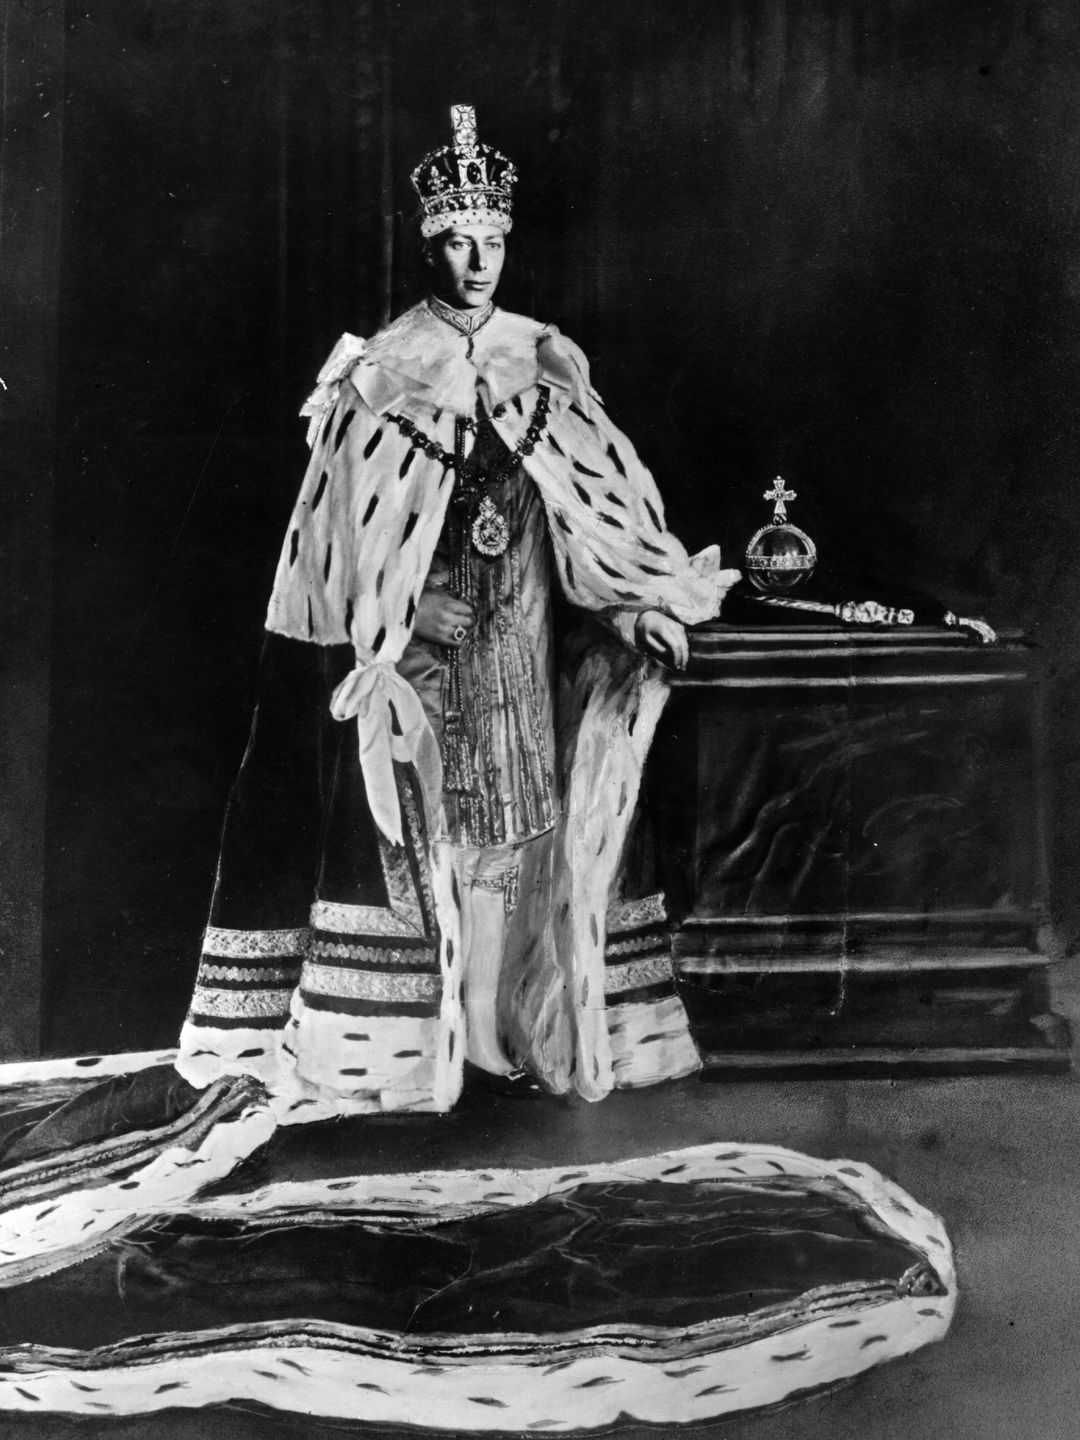 King George VI sporting his coronation robes